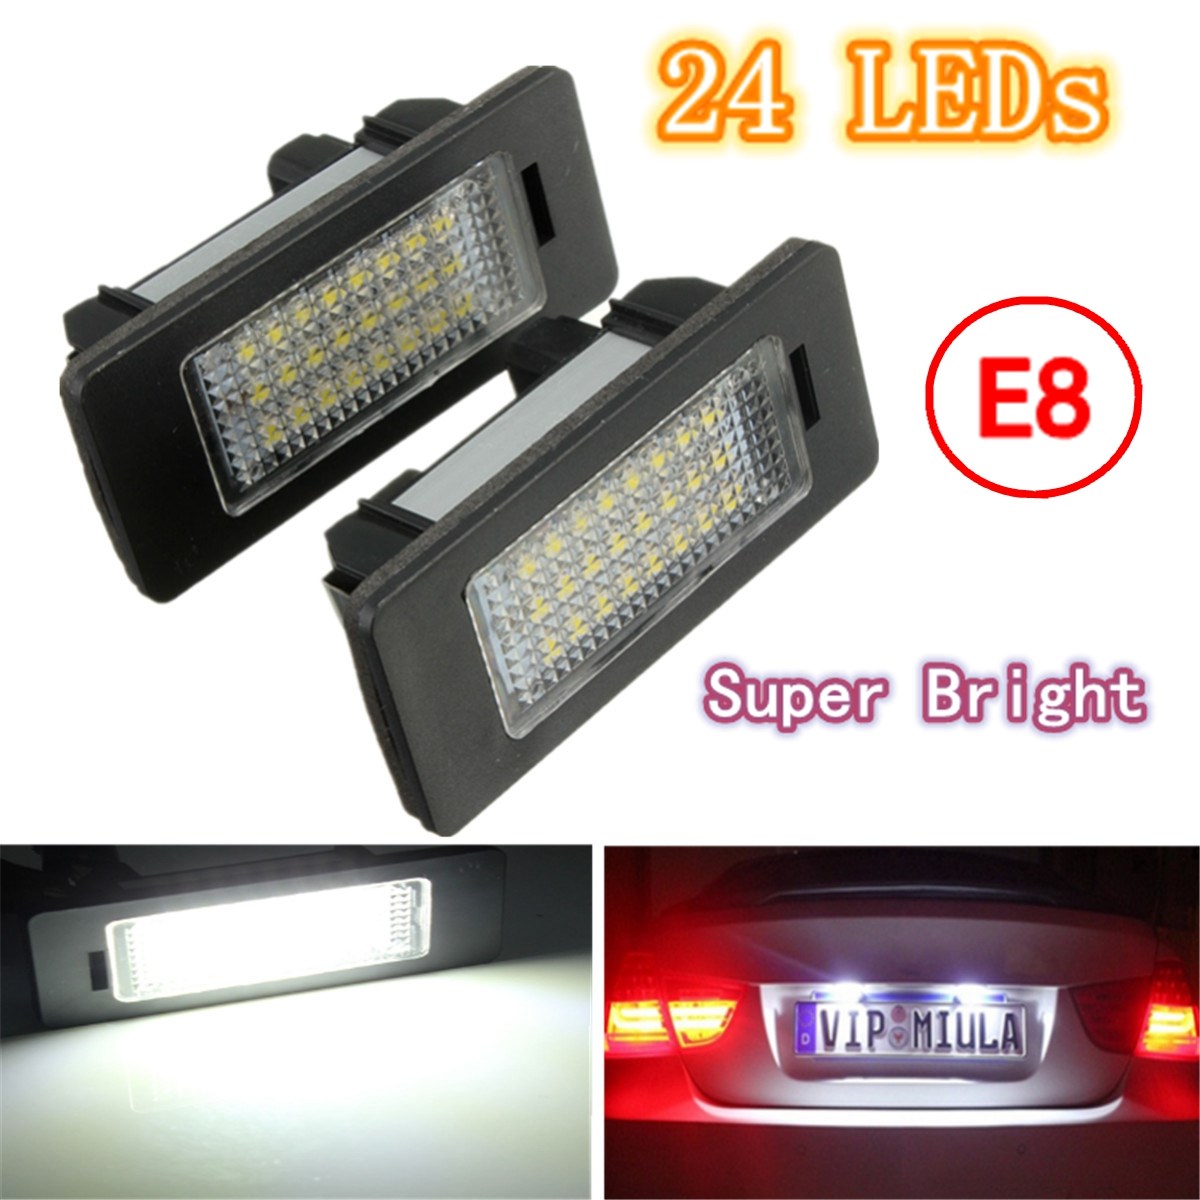 2X E-marked OBC Error Free 24 LED White License Number Plate Light Lamp For BMW E81 E82 E90 E91 E92 E93 E60 E61 E39 X1/E84